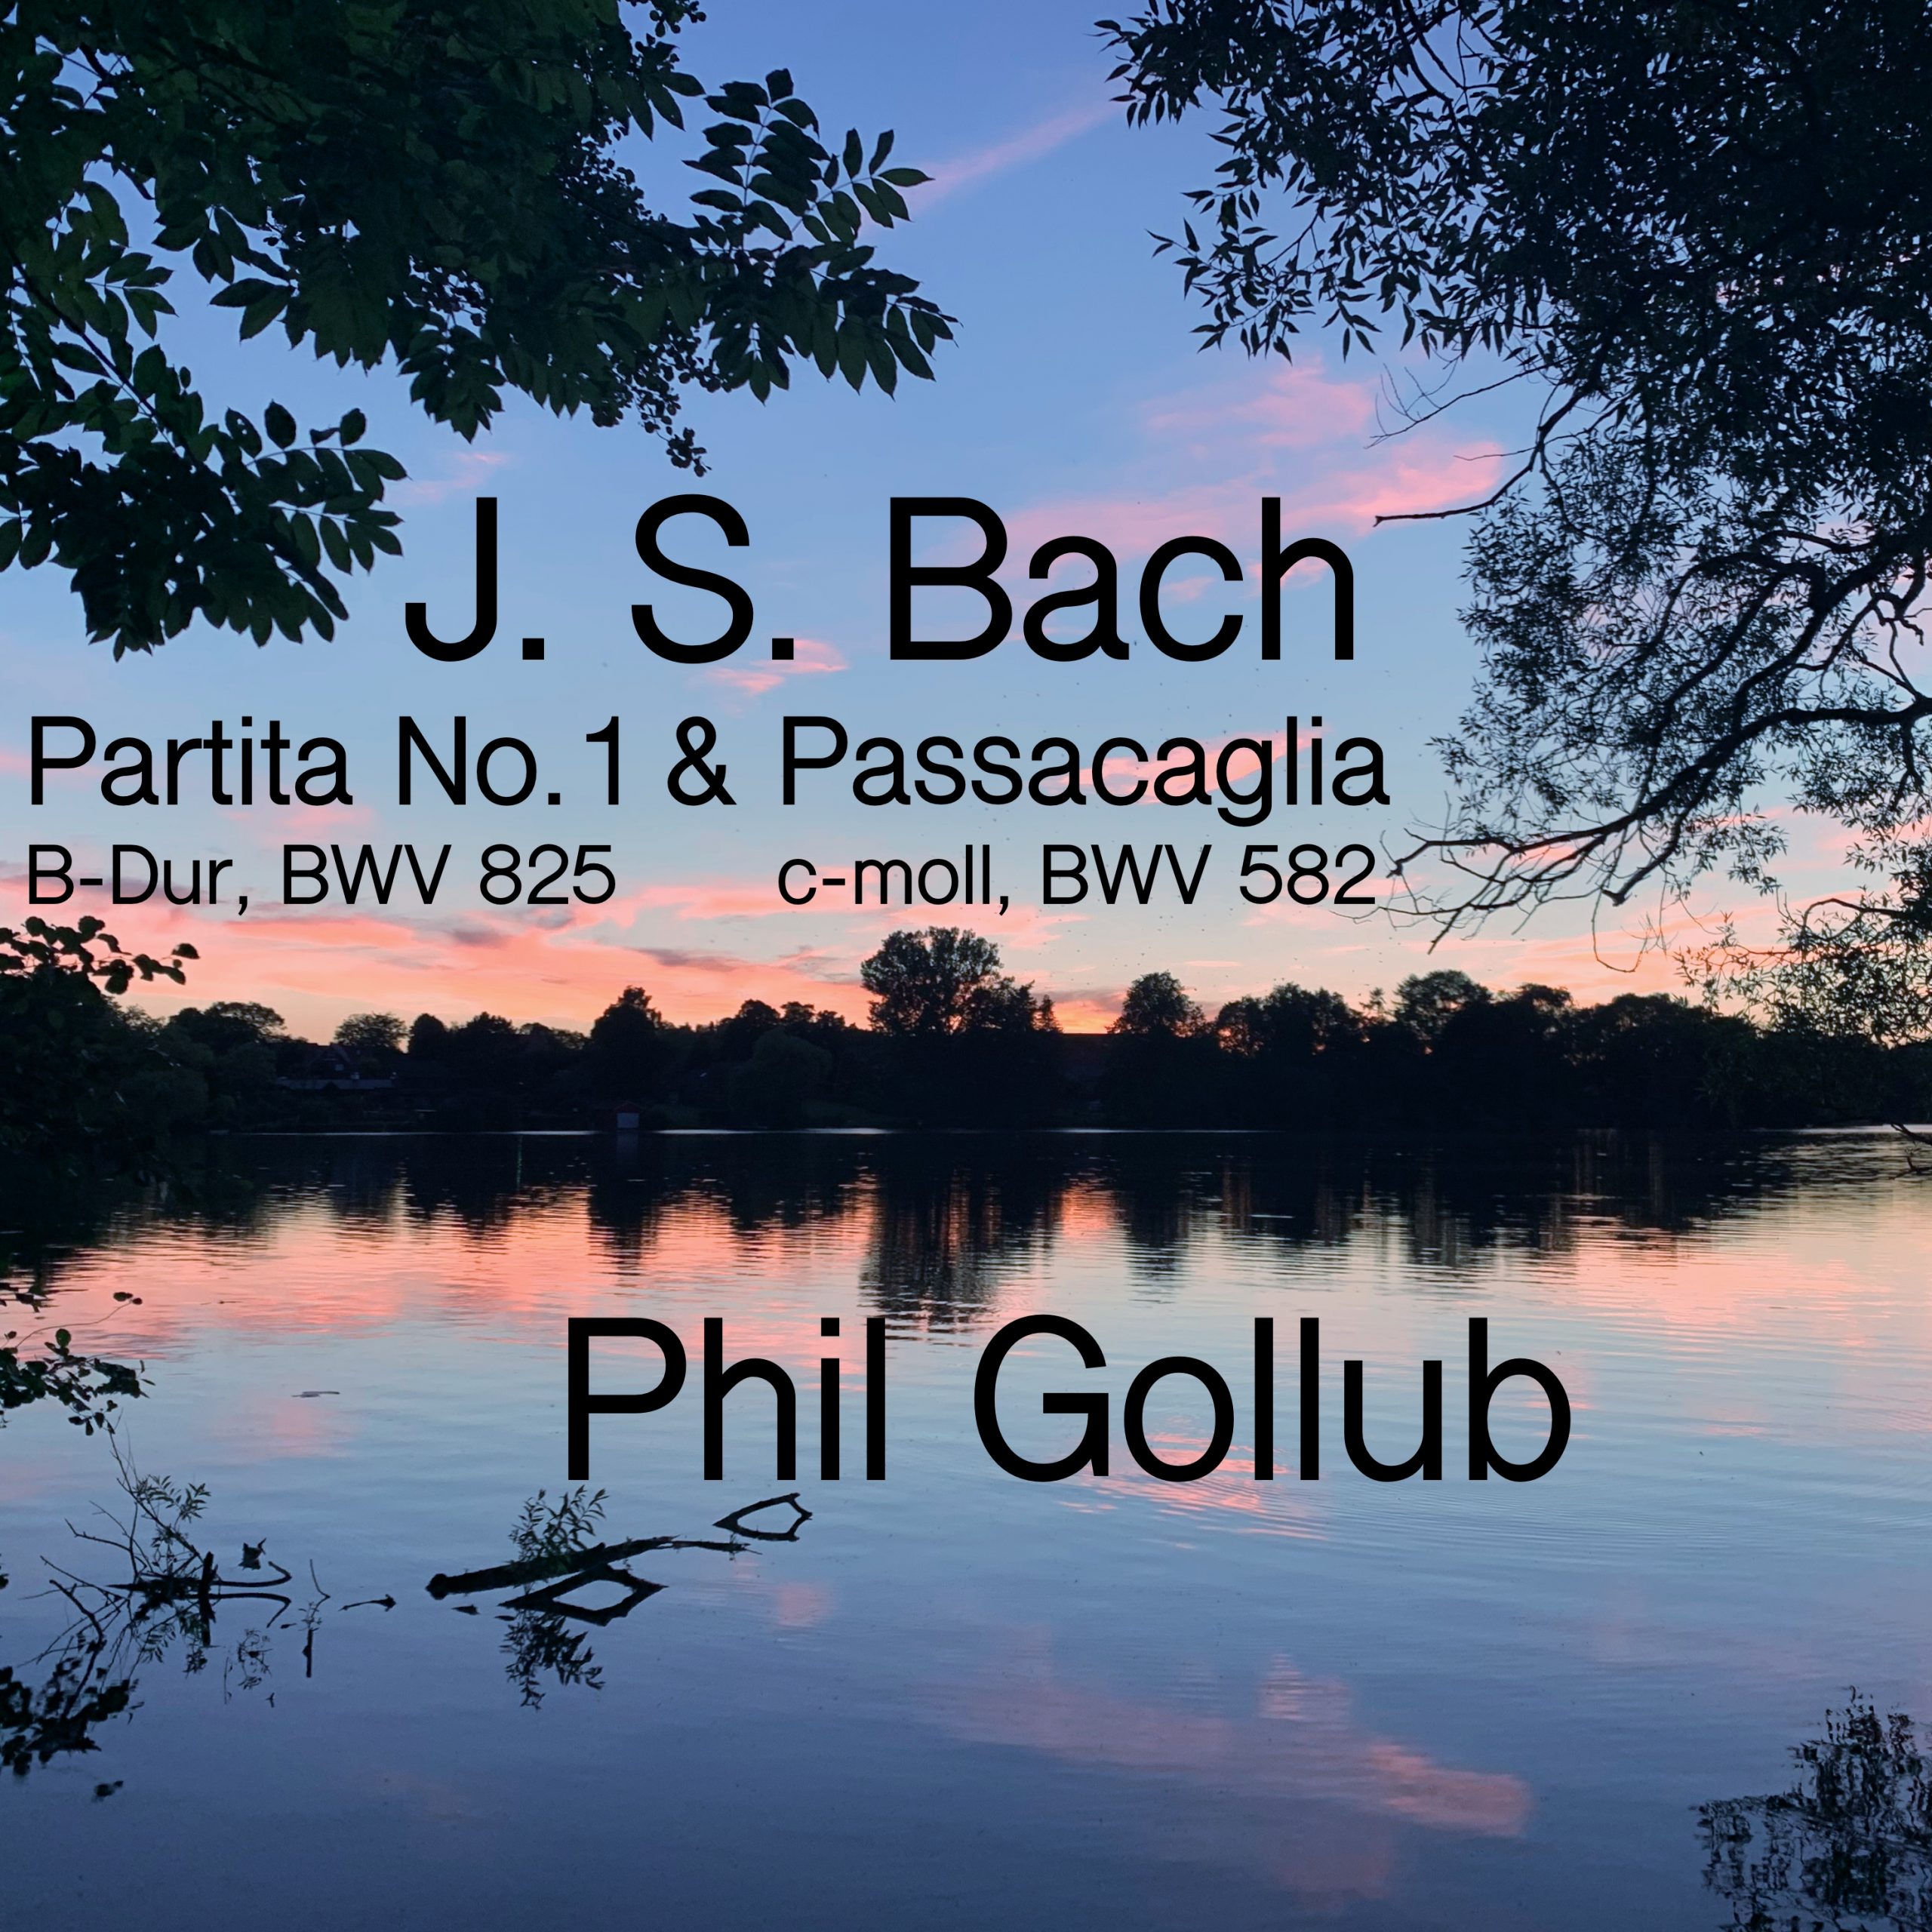 Neuankündigung: Phil Gollub spielt Werke von Johann Sebastian Bach auf Spotify etc.